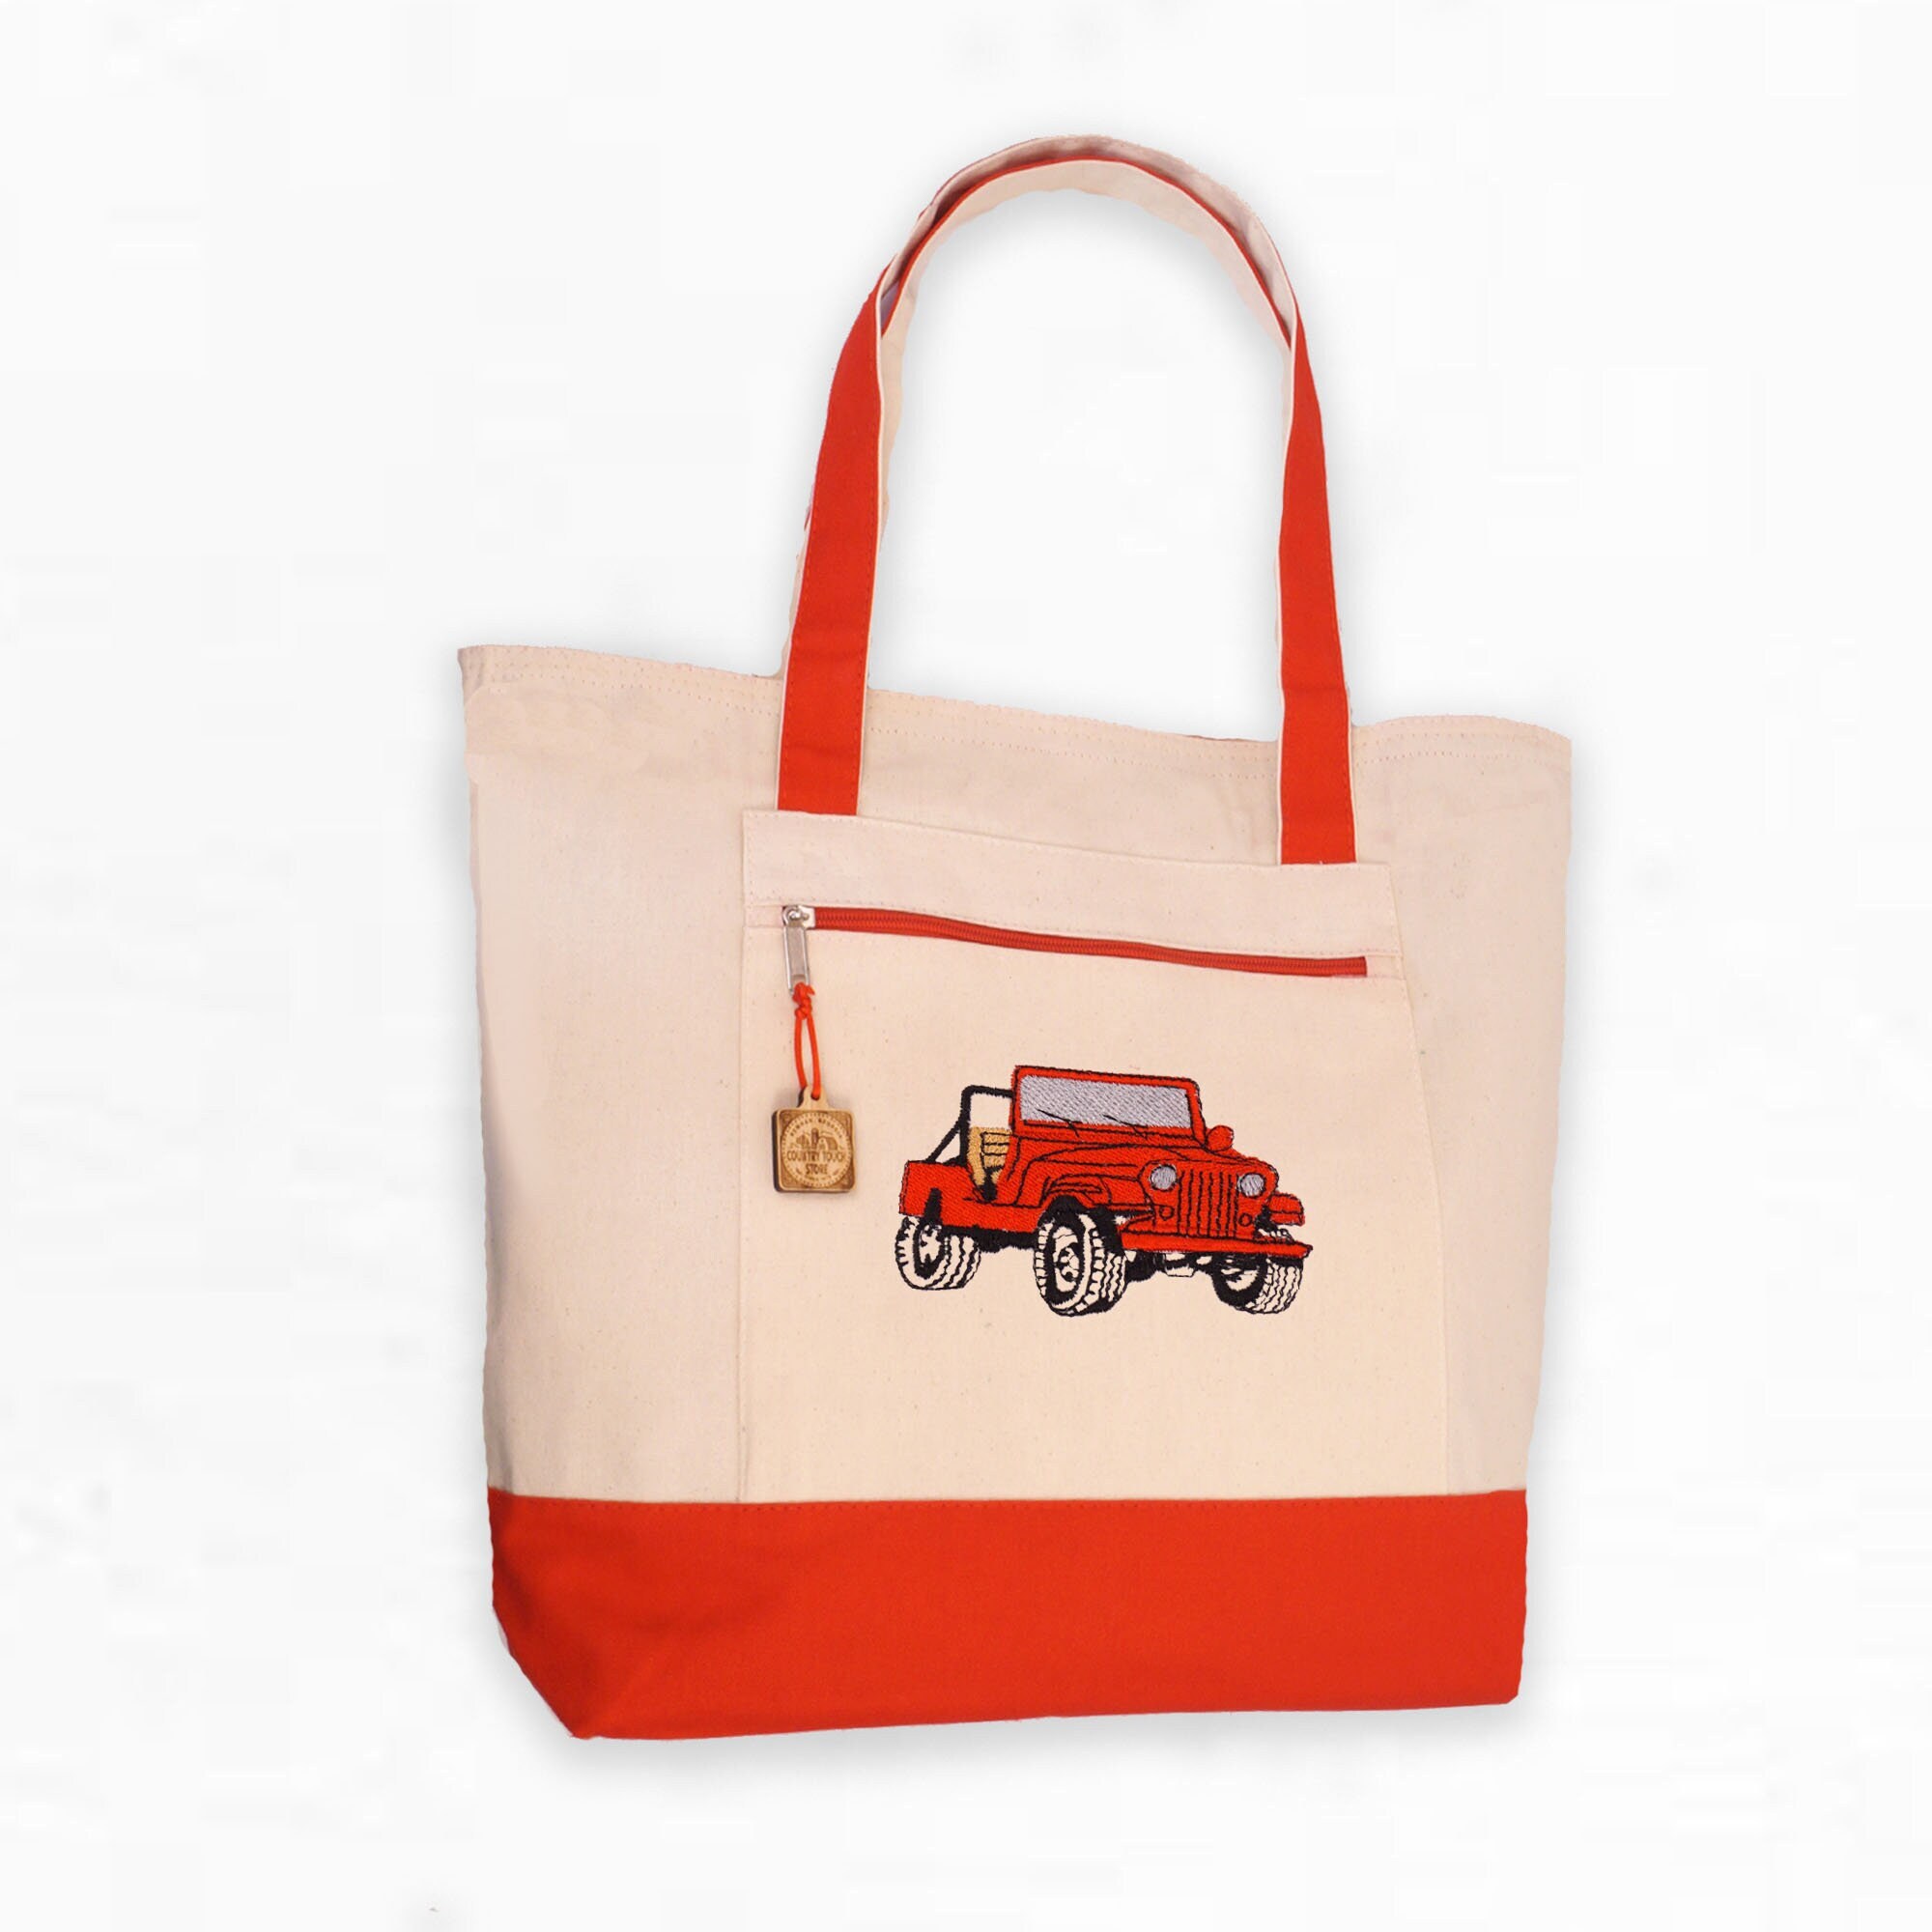 4x4 Vehicle Tote Bag with Zip Top and Zip pocket, Large Canvas Tote, Handbag,  Shoulder Bag, Purse, Beach Bag, Camp Tote